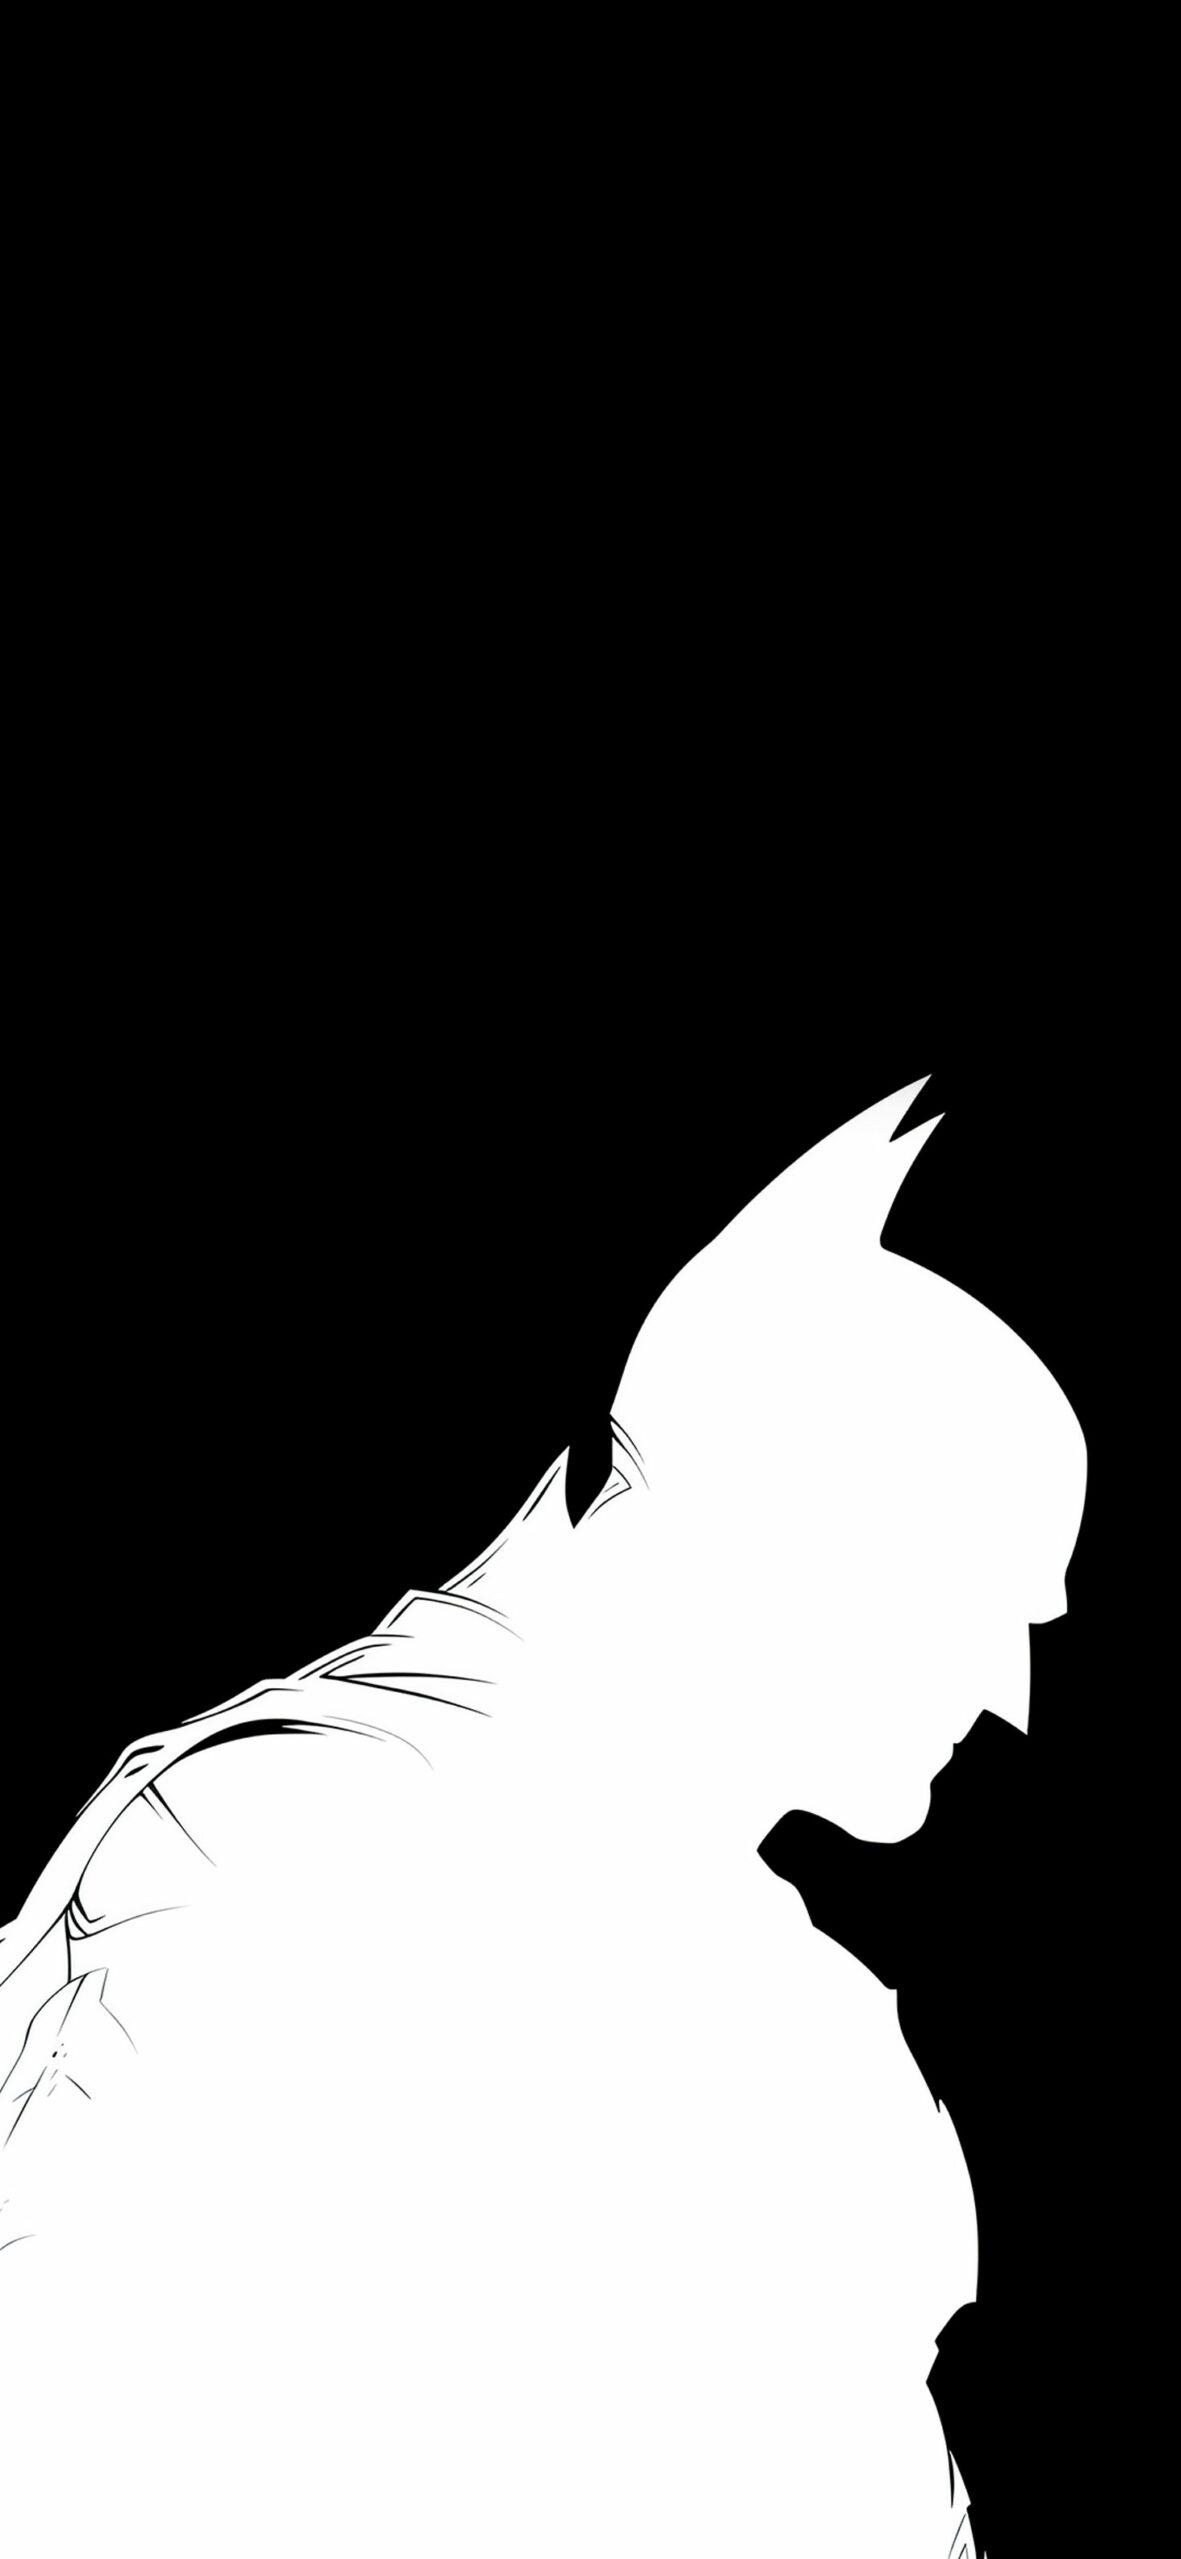 Black Batman Silhouette On White Wallpaper Best Dc